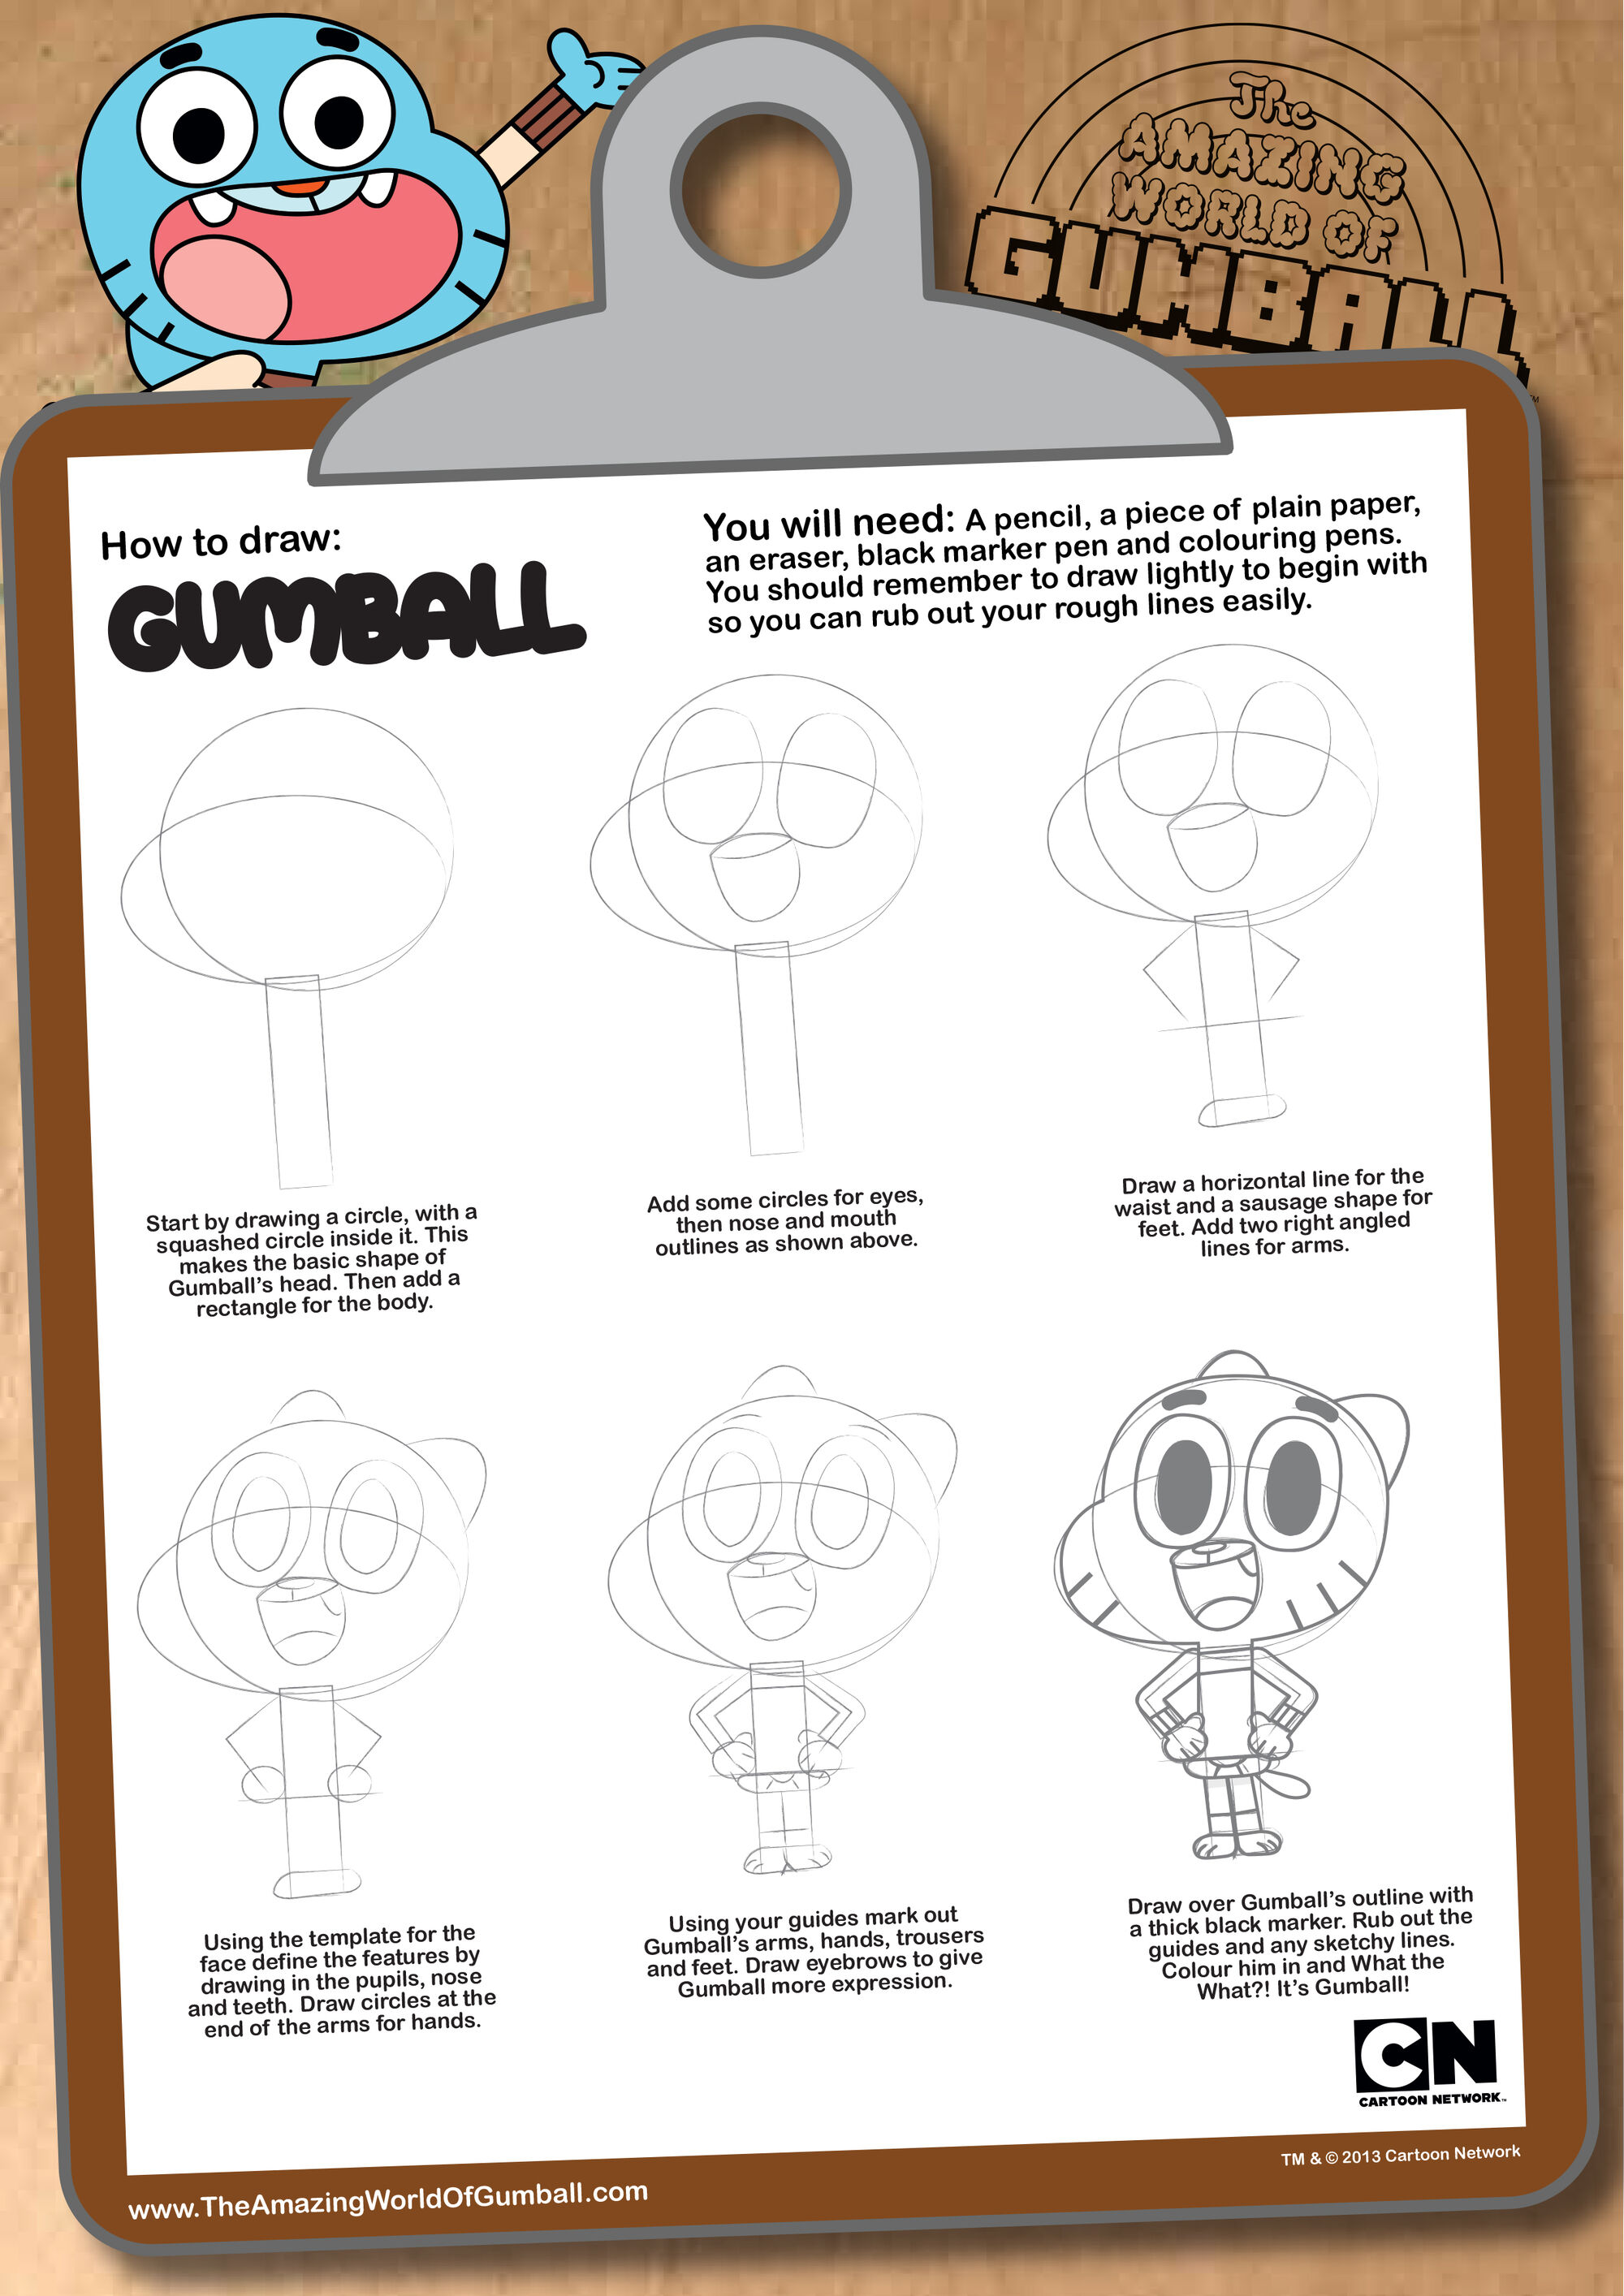 Image Drawing gumball.jpg The Amazing World of Gumball Wiki